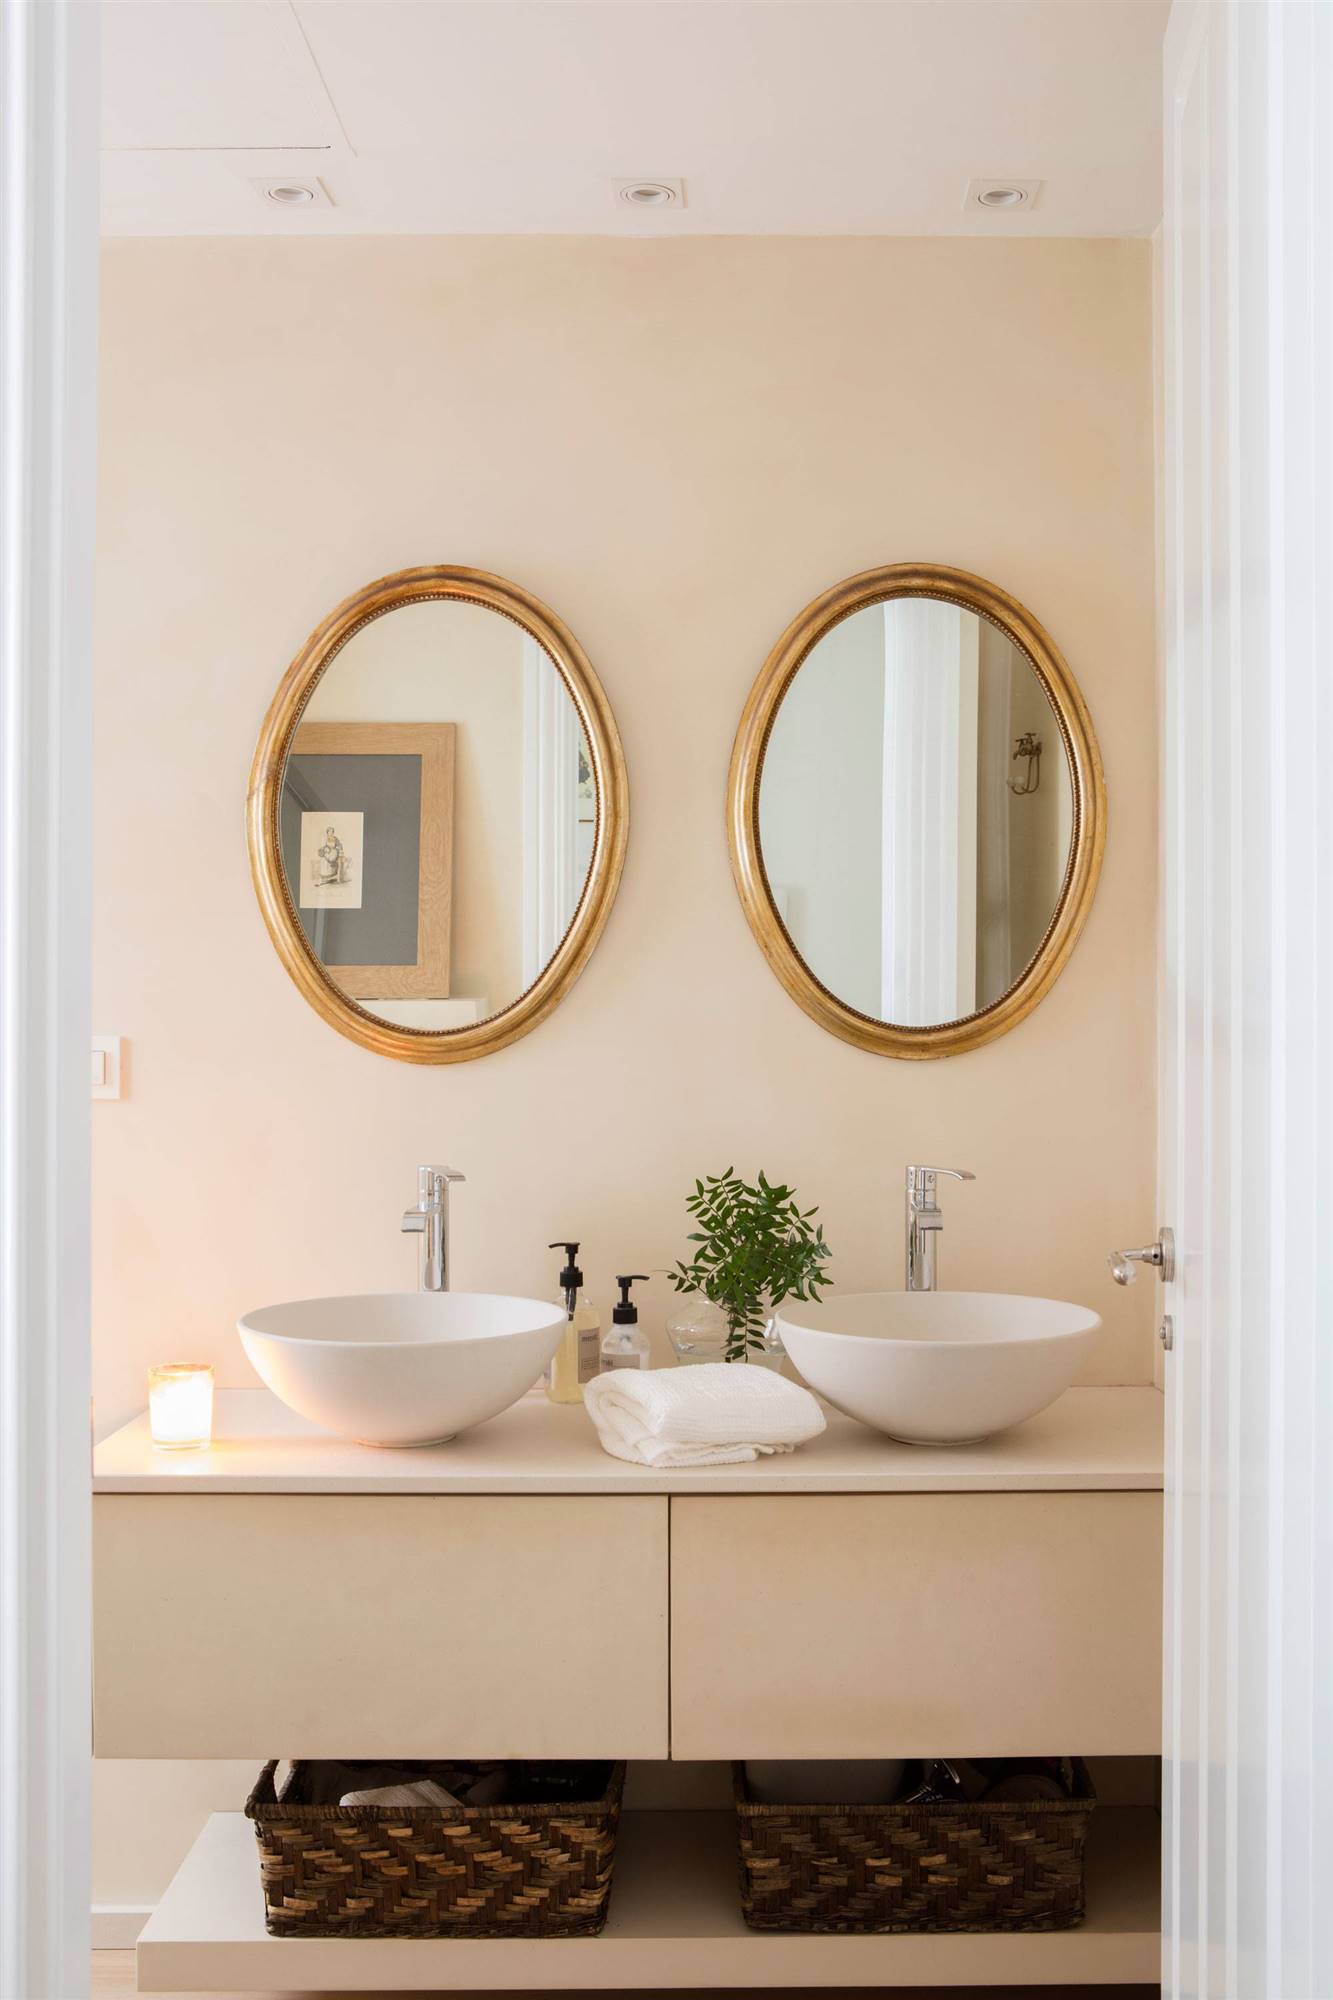 Baño de estilo moderno con espejos redondos con marcos dorados. 